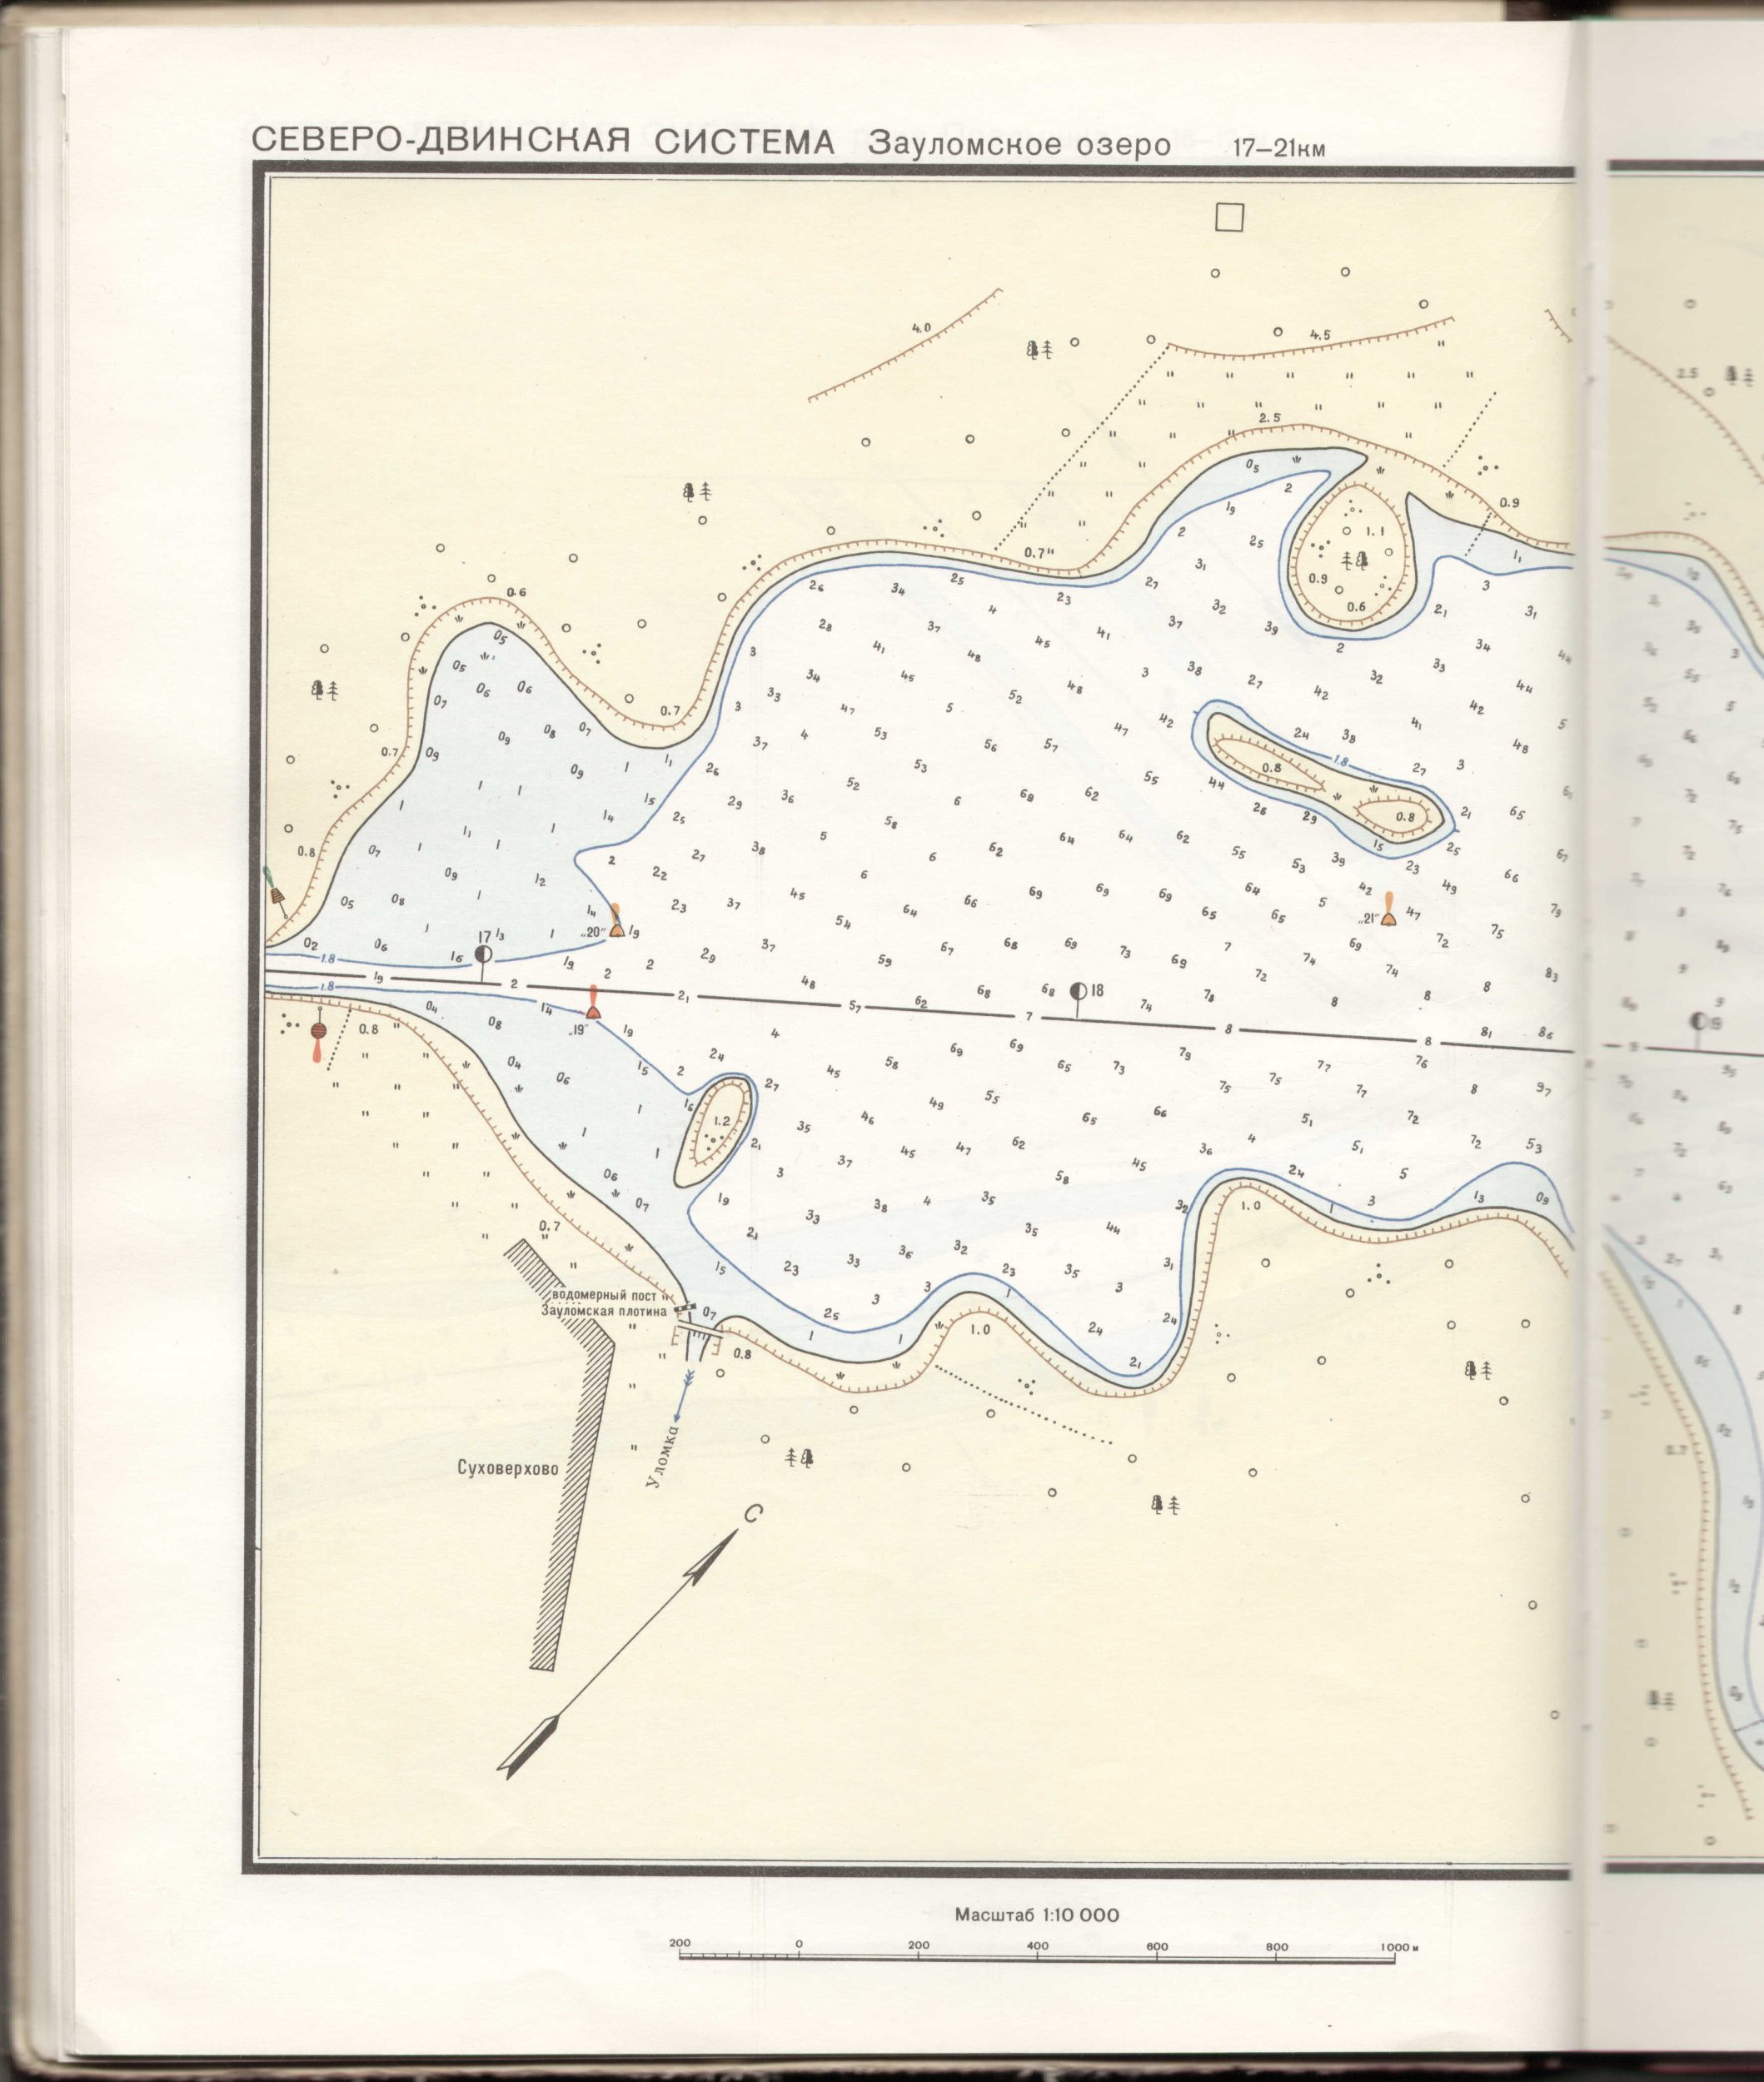 Глубина вологодских озер. Карта глубин Зауломское озеро. Зауломское озеро Вологодская область карта глубин. Карта глубин Кубенского озера. Карта глубин Зауломского озера.